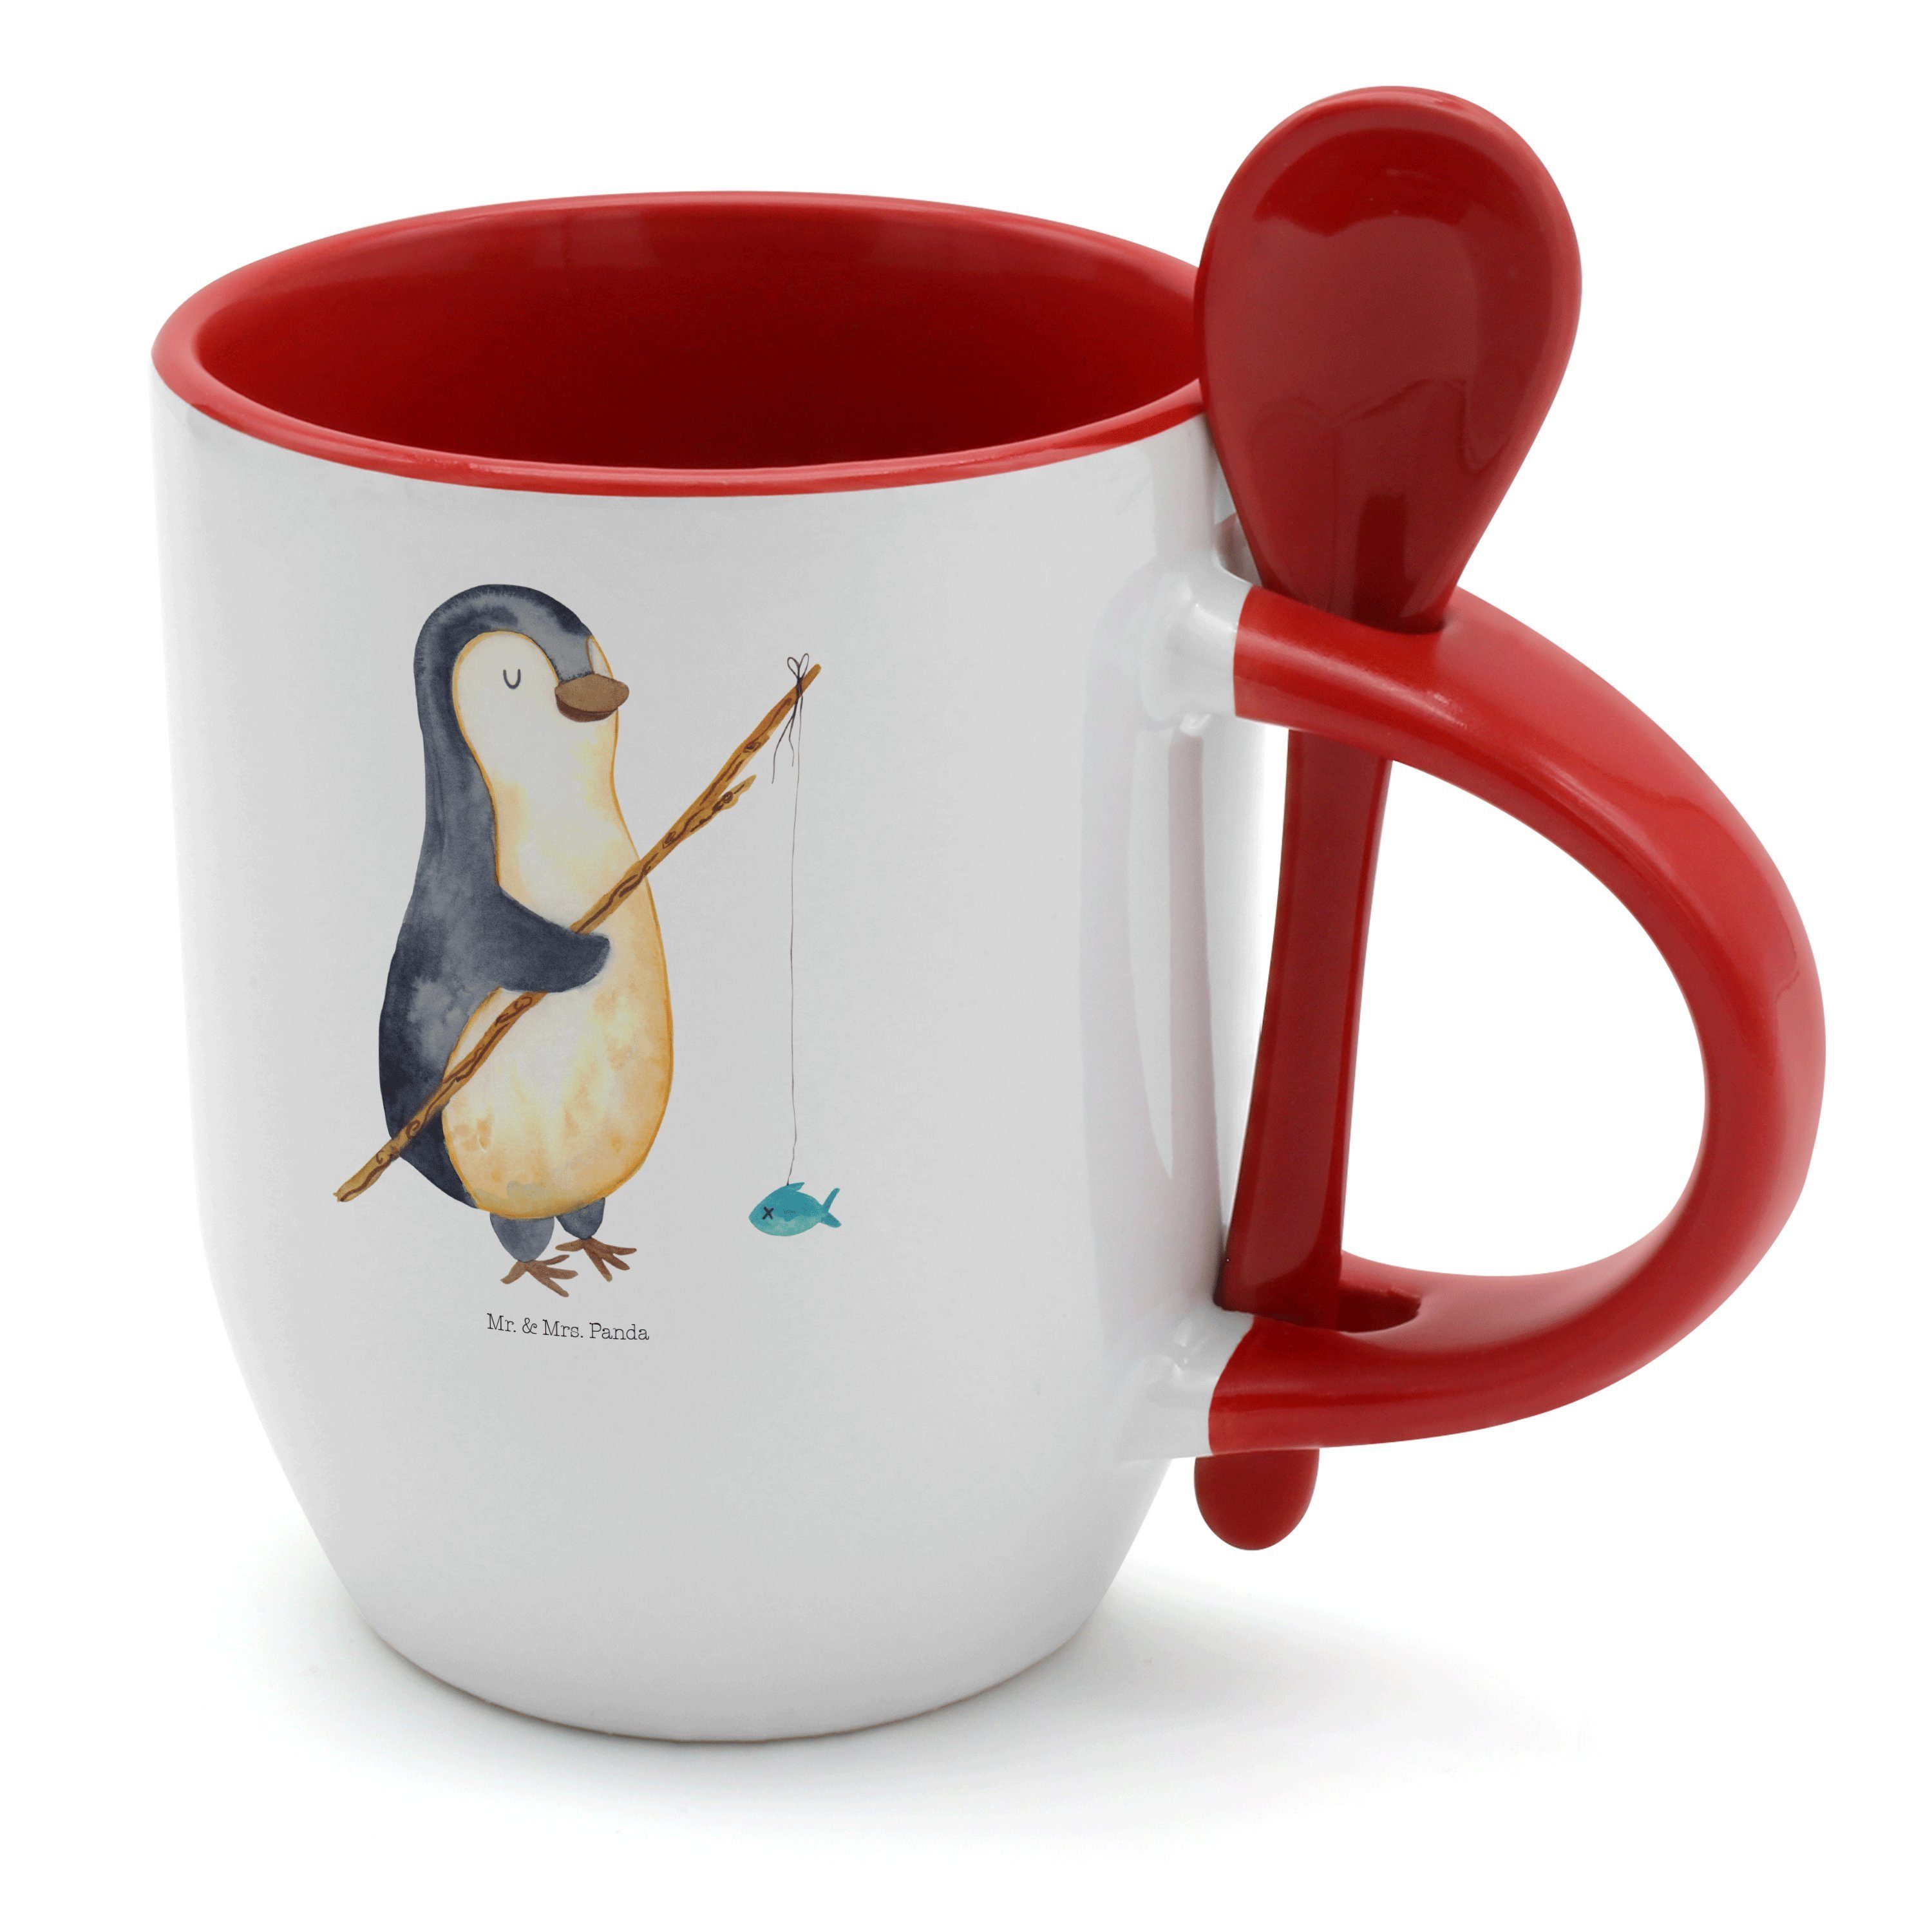 https://i.otto.de/i/otto/d4f960d0-49c7-53d3-a2c7-ba1ff6ea93f6/mr-mrs-panda-tasse-pinguin-angler-weiss-geschenk-hobby-angel-kaffeebecher-tasse-keramik.jpg?$formatz$